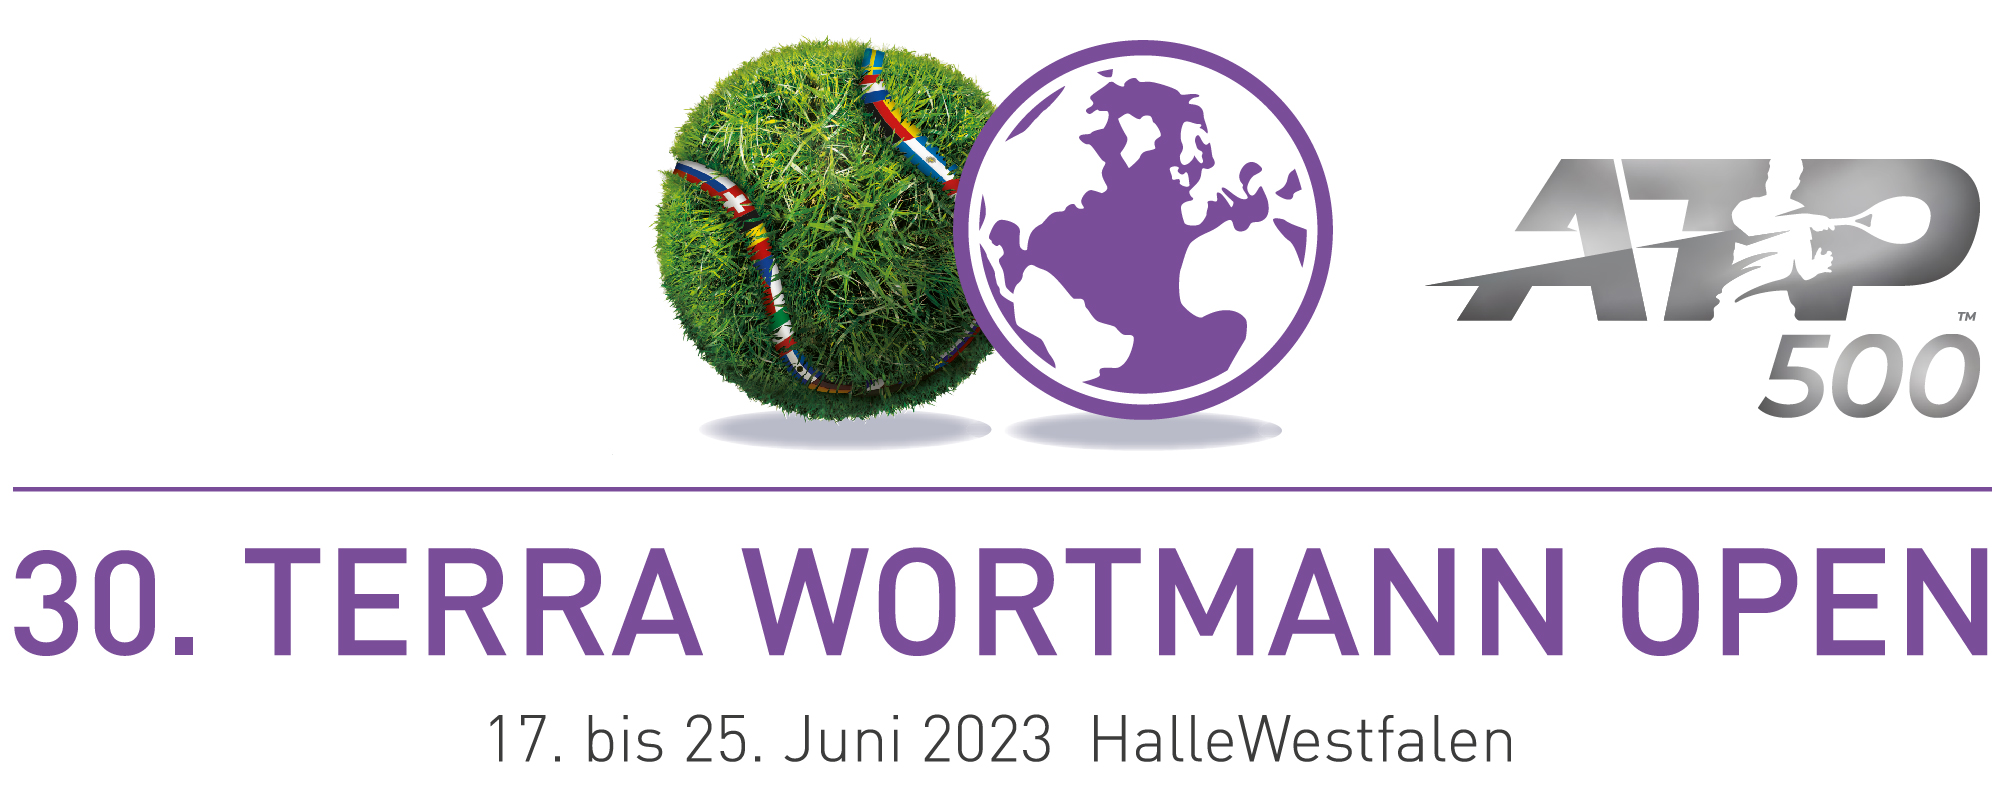 Terra Wortmann Open 2023